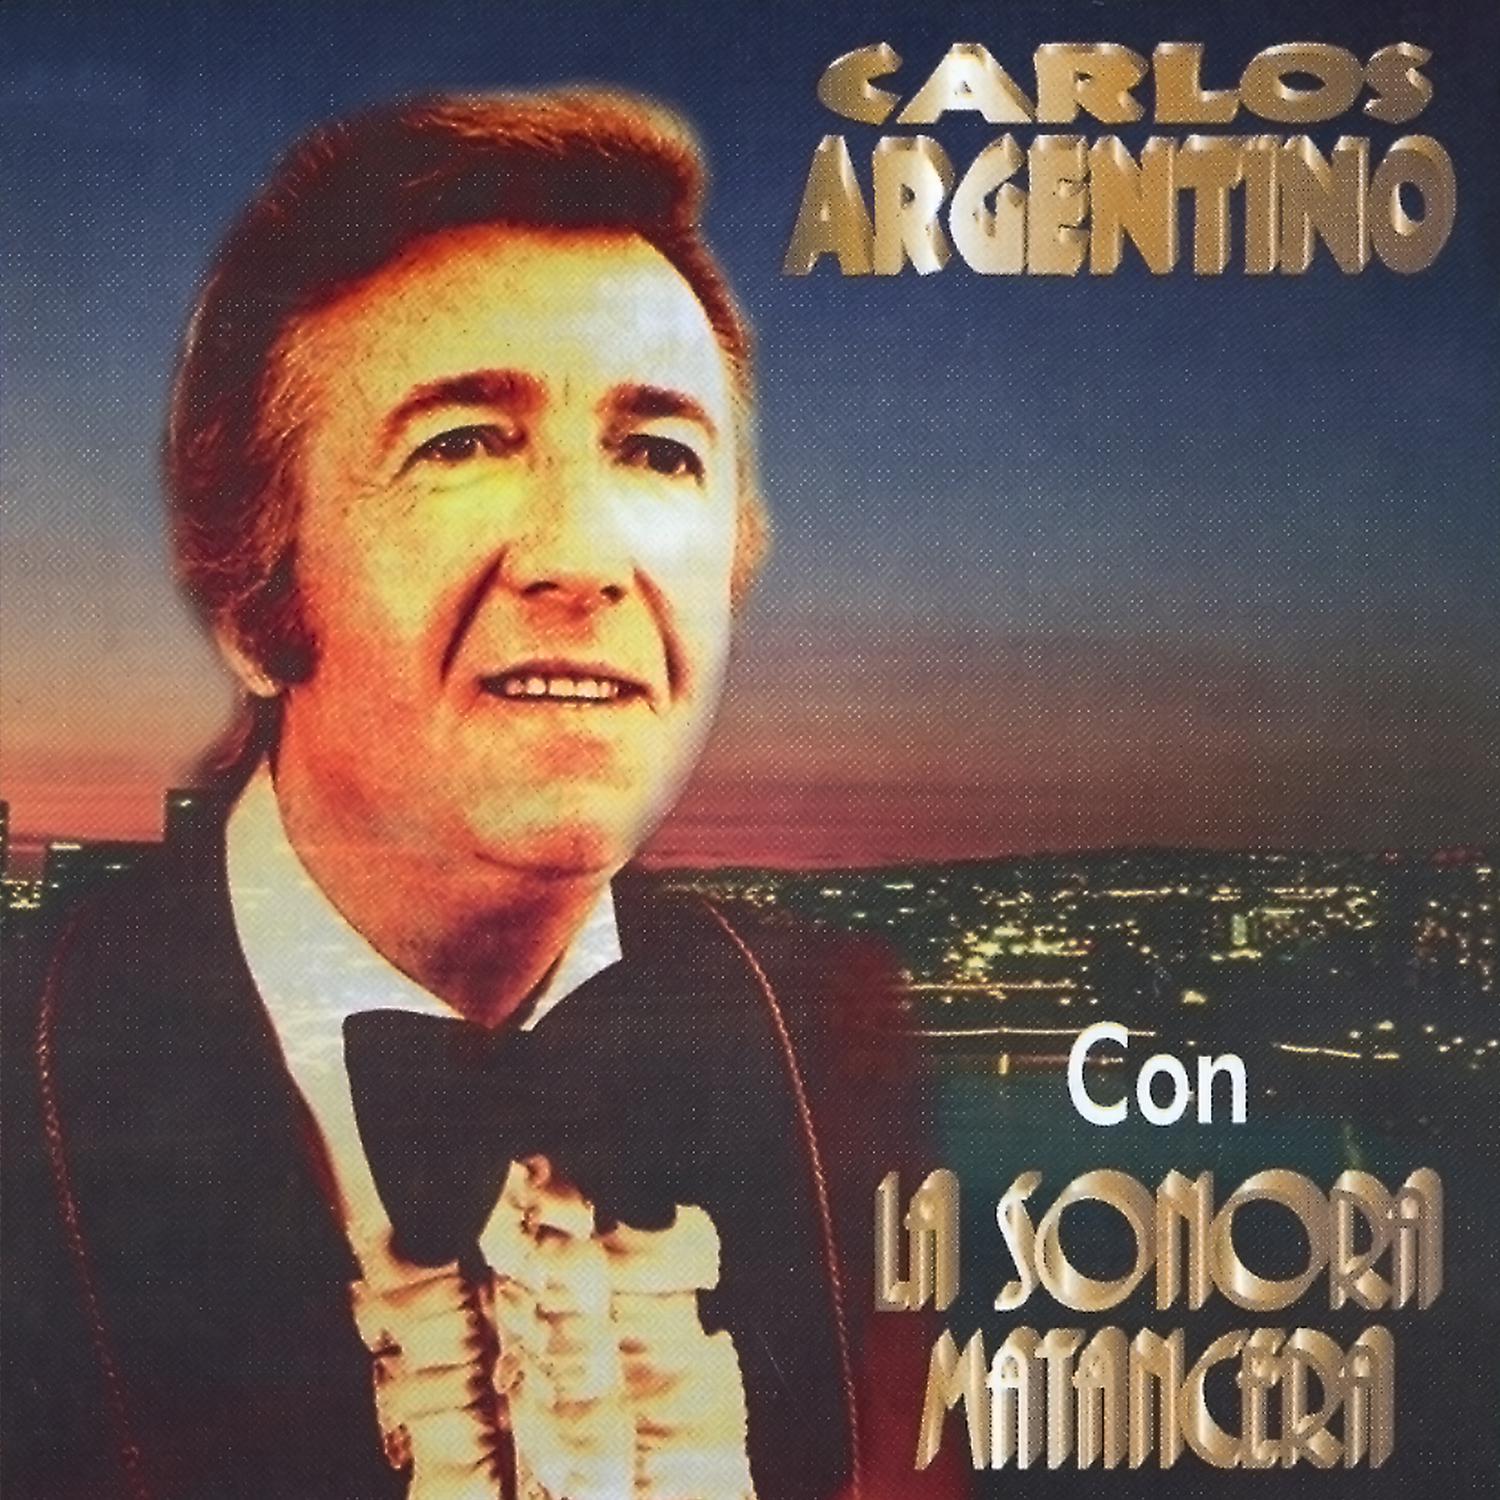 Carlos Argentino Con la Sonora Matancera